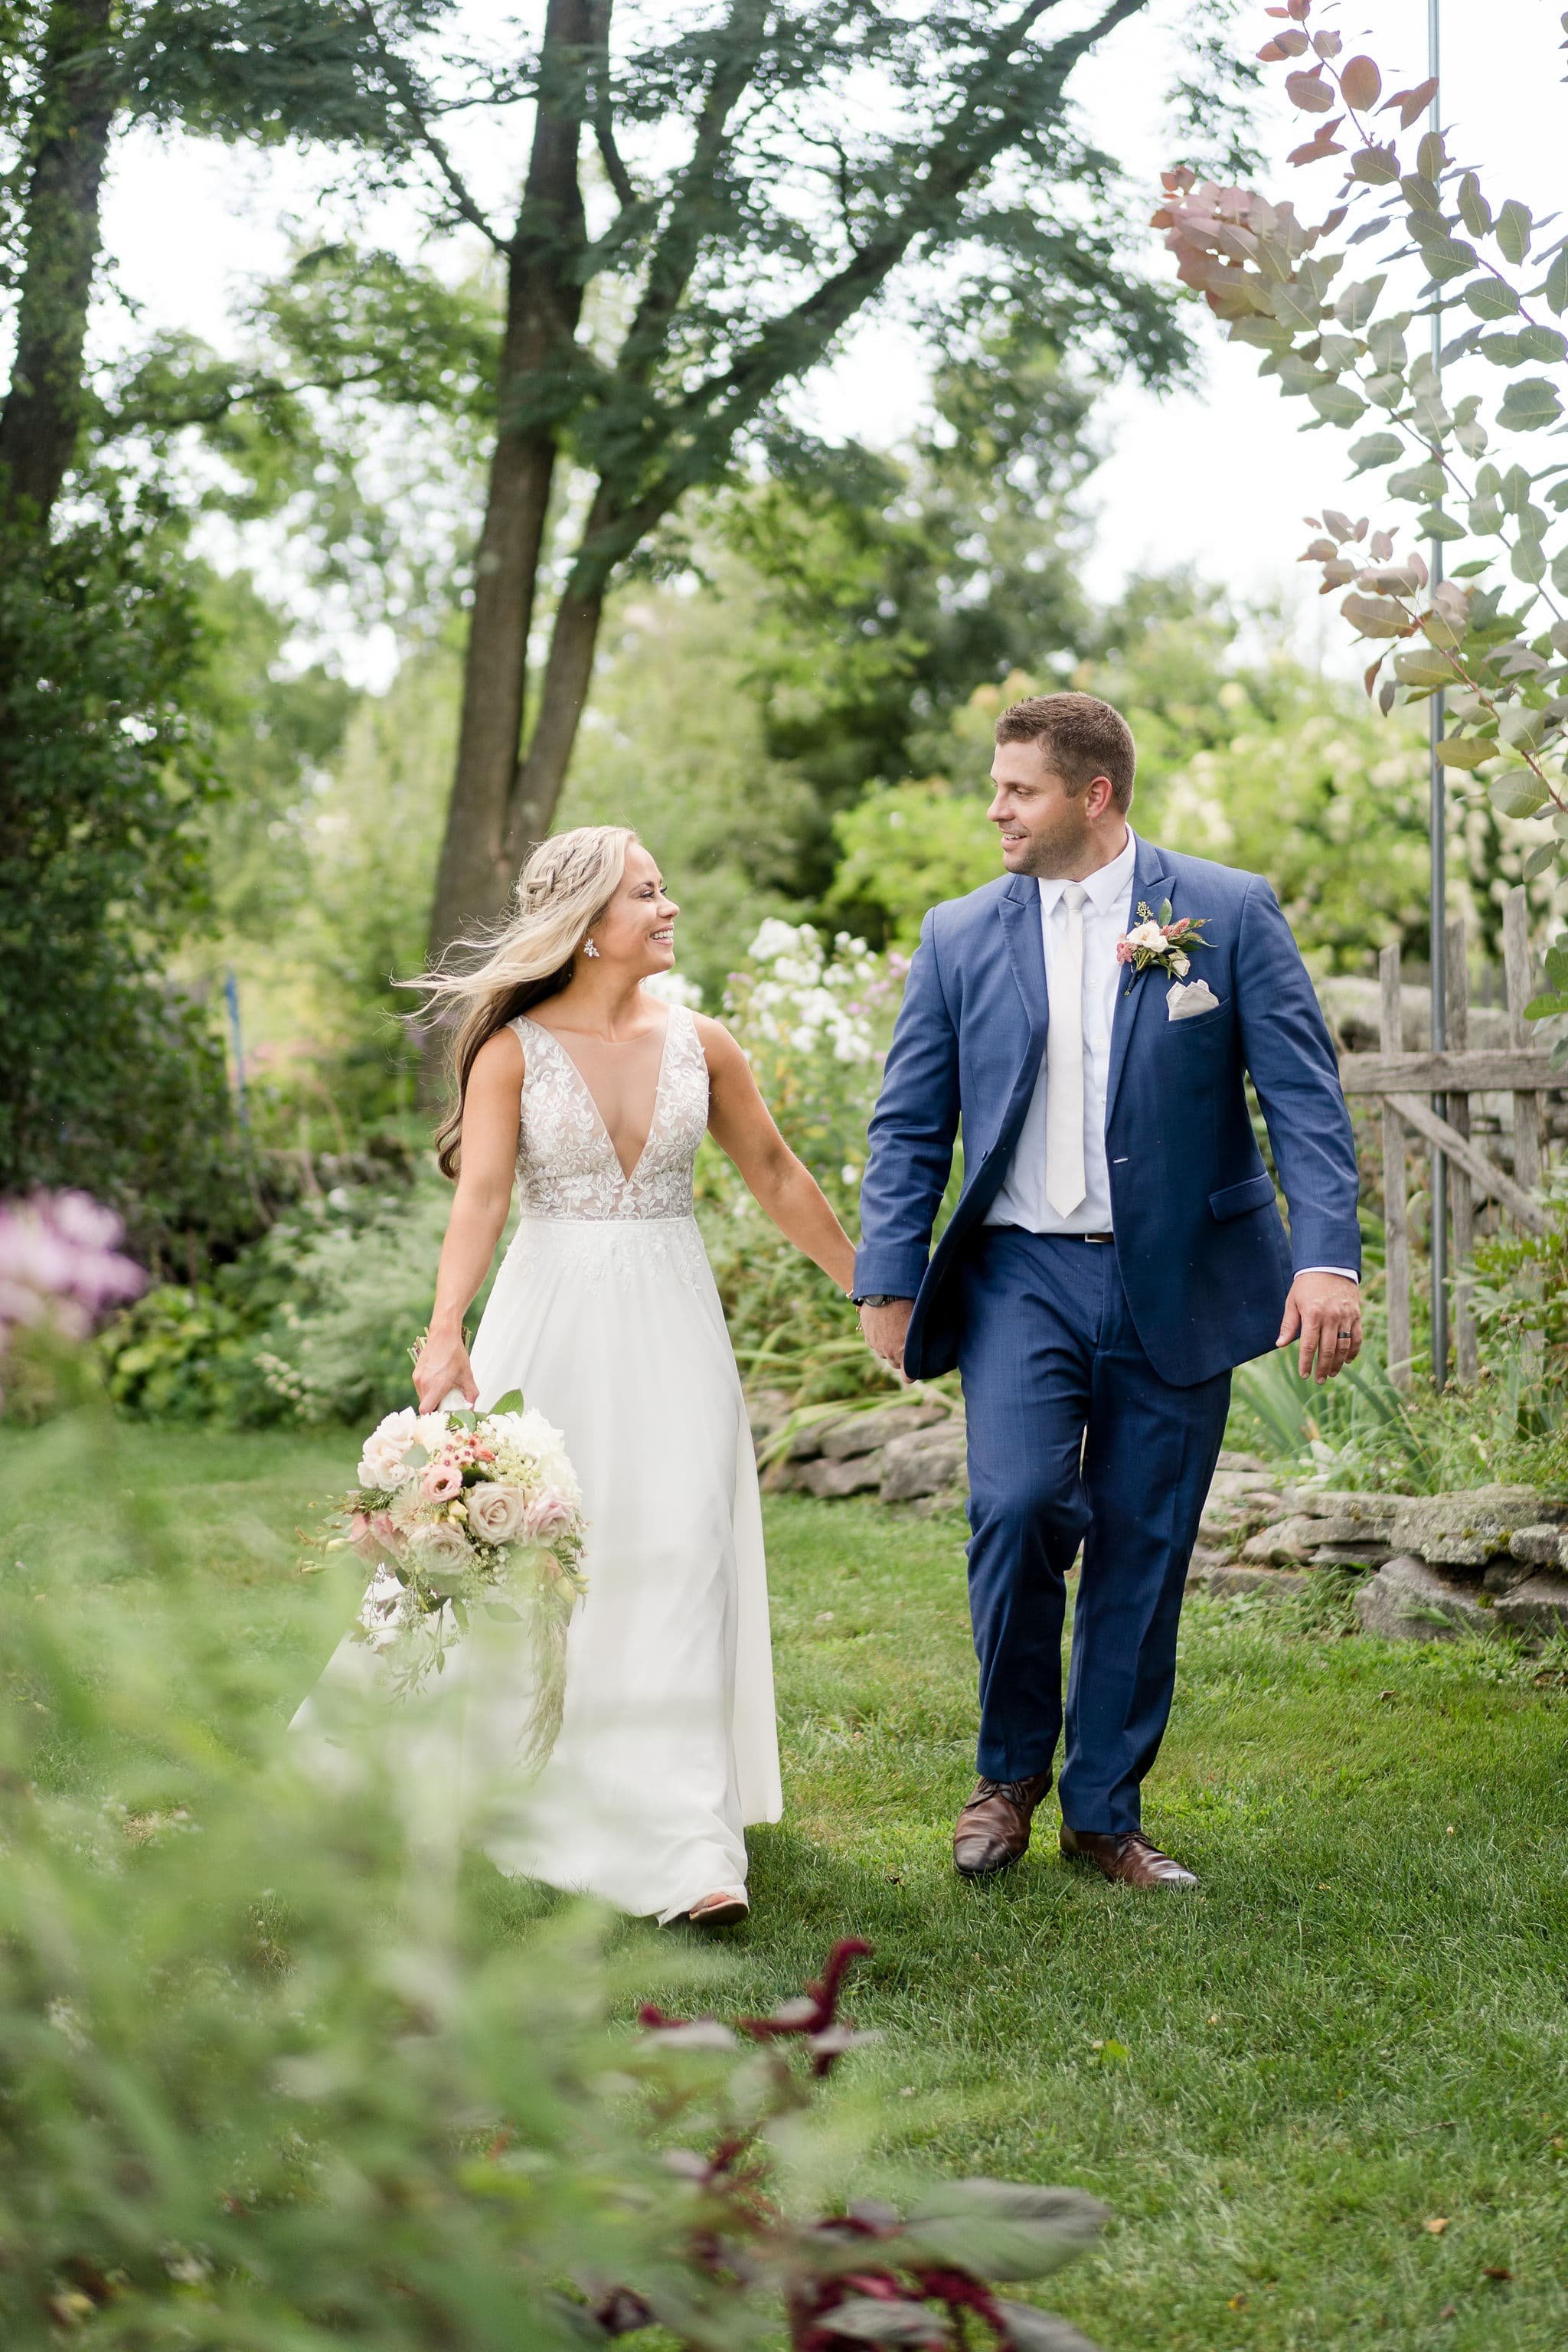 Rustic Barn Weddings In PA | 6th & River and Fox Hill Farm